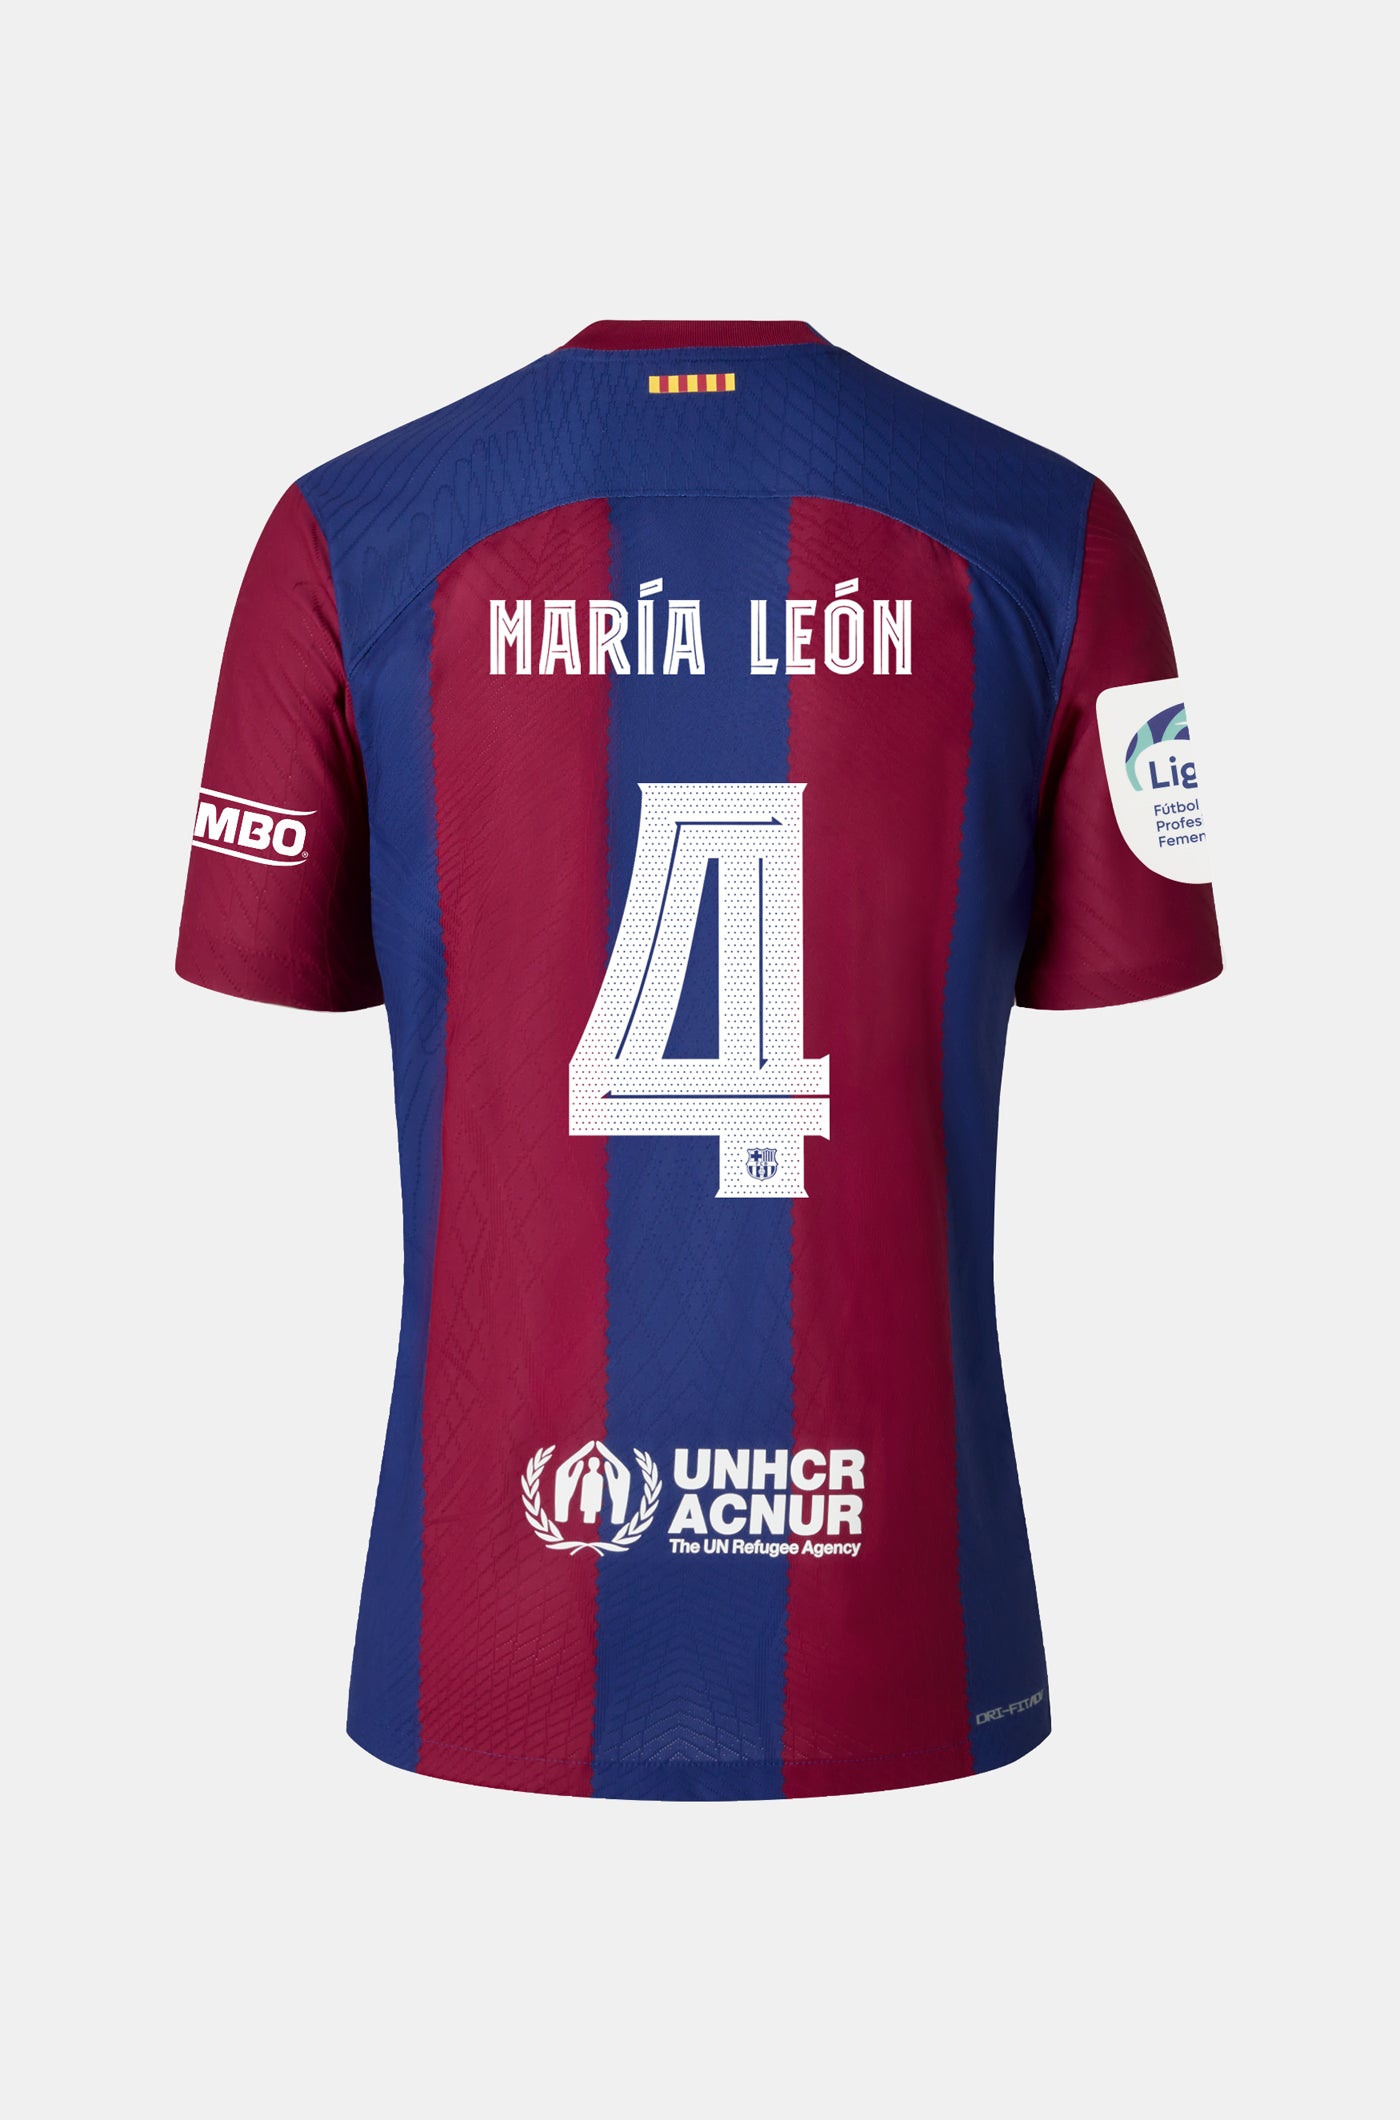 Liga F FC Barcelona Home Shirt 23/24 Player's Edition - Women - MARÍA LEÓN